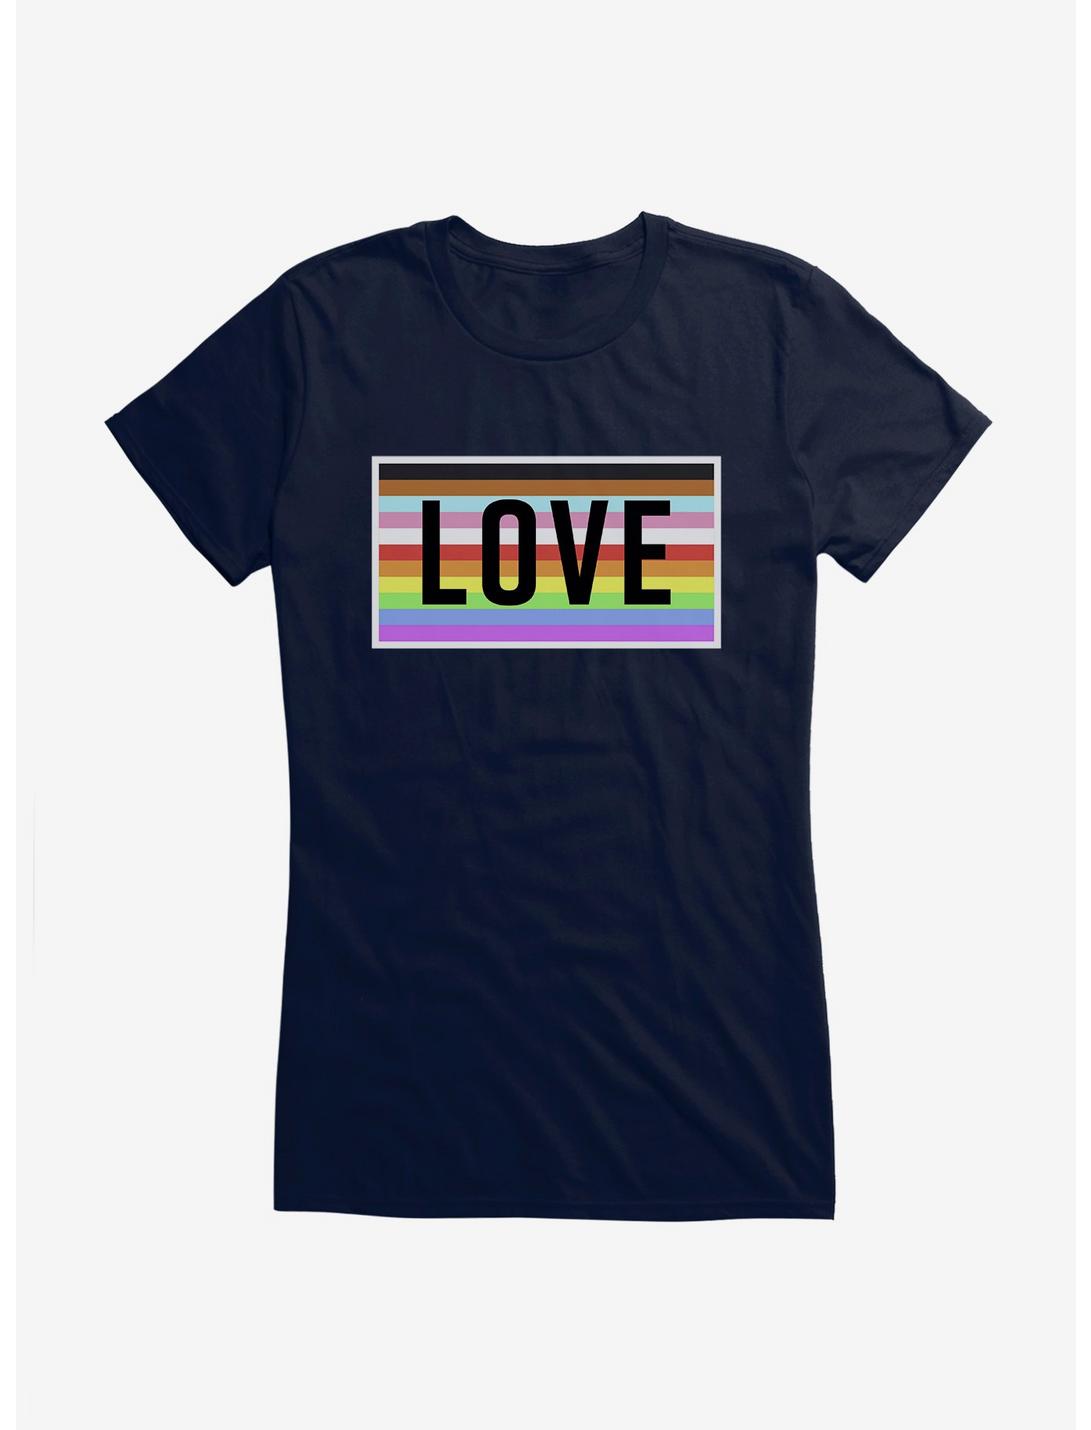 Hot Topic Foundation LOVE Girls T-Shirt, NAVY, hi-res